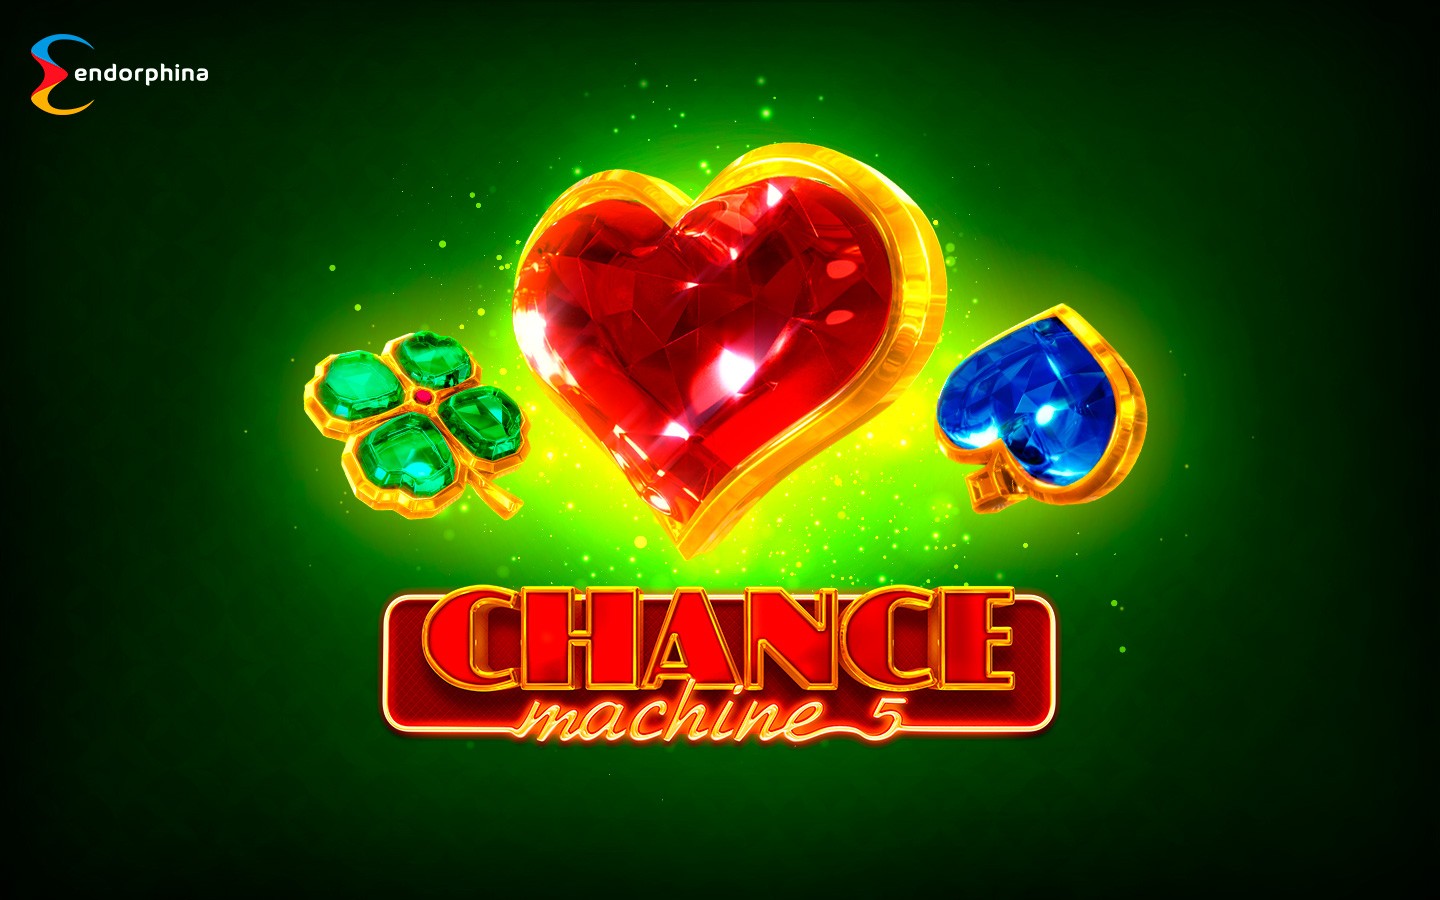 Chance Machine 5 slot cover image